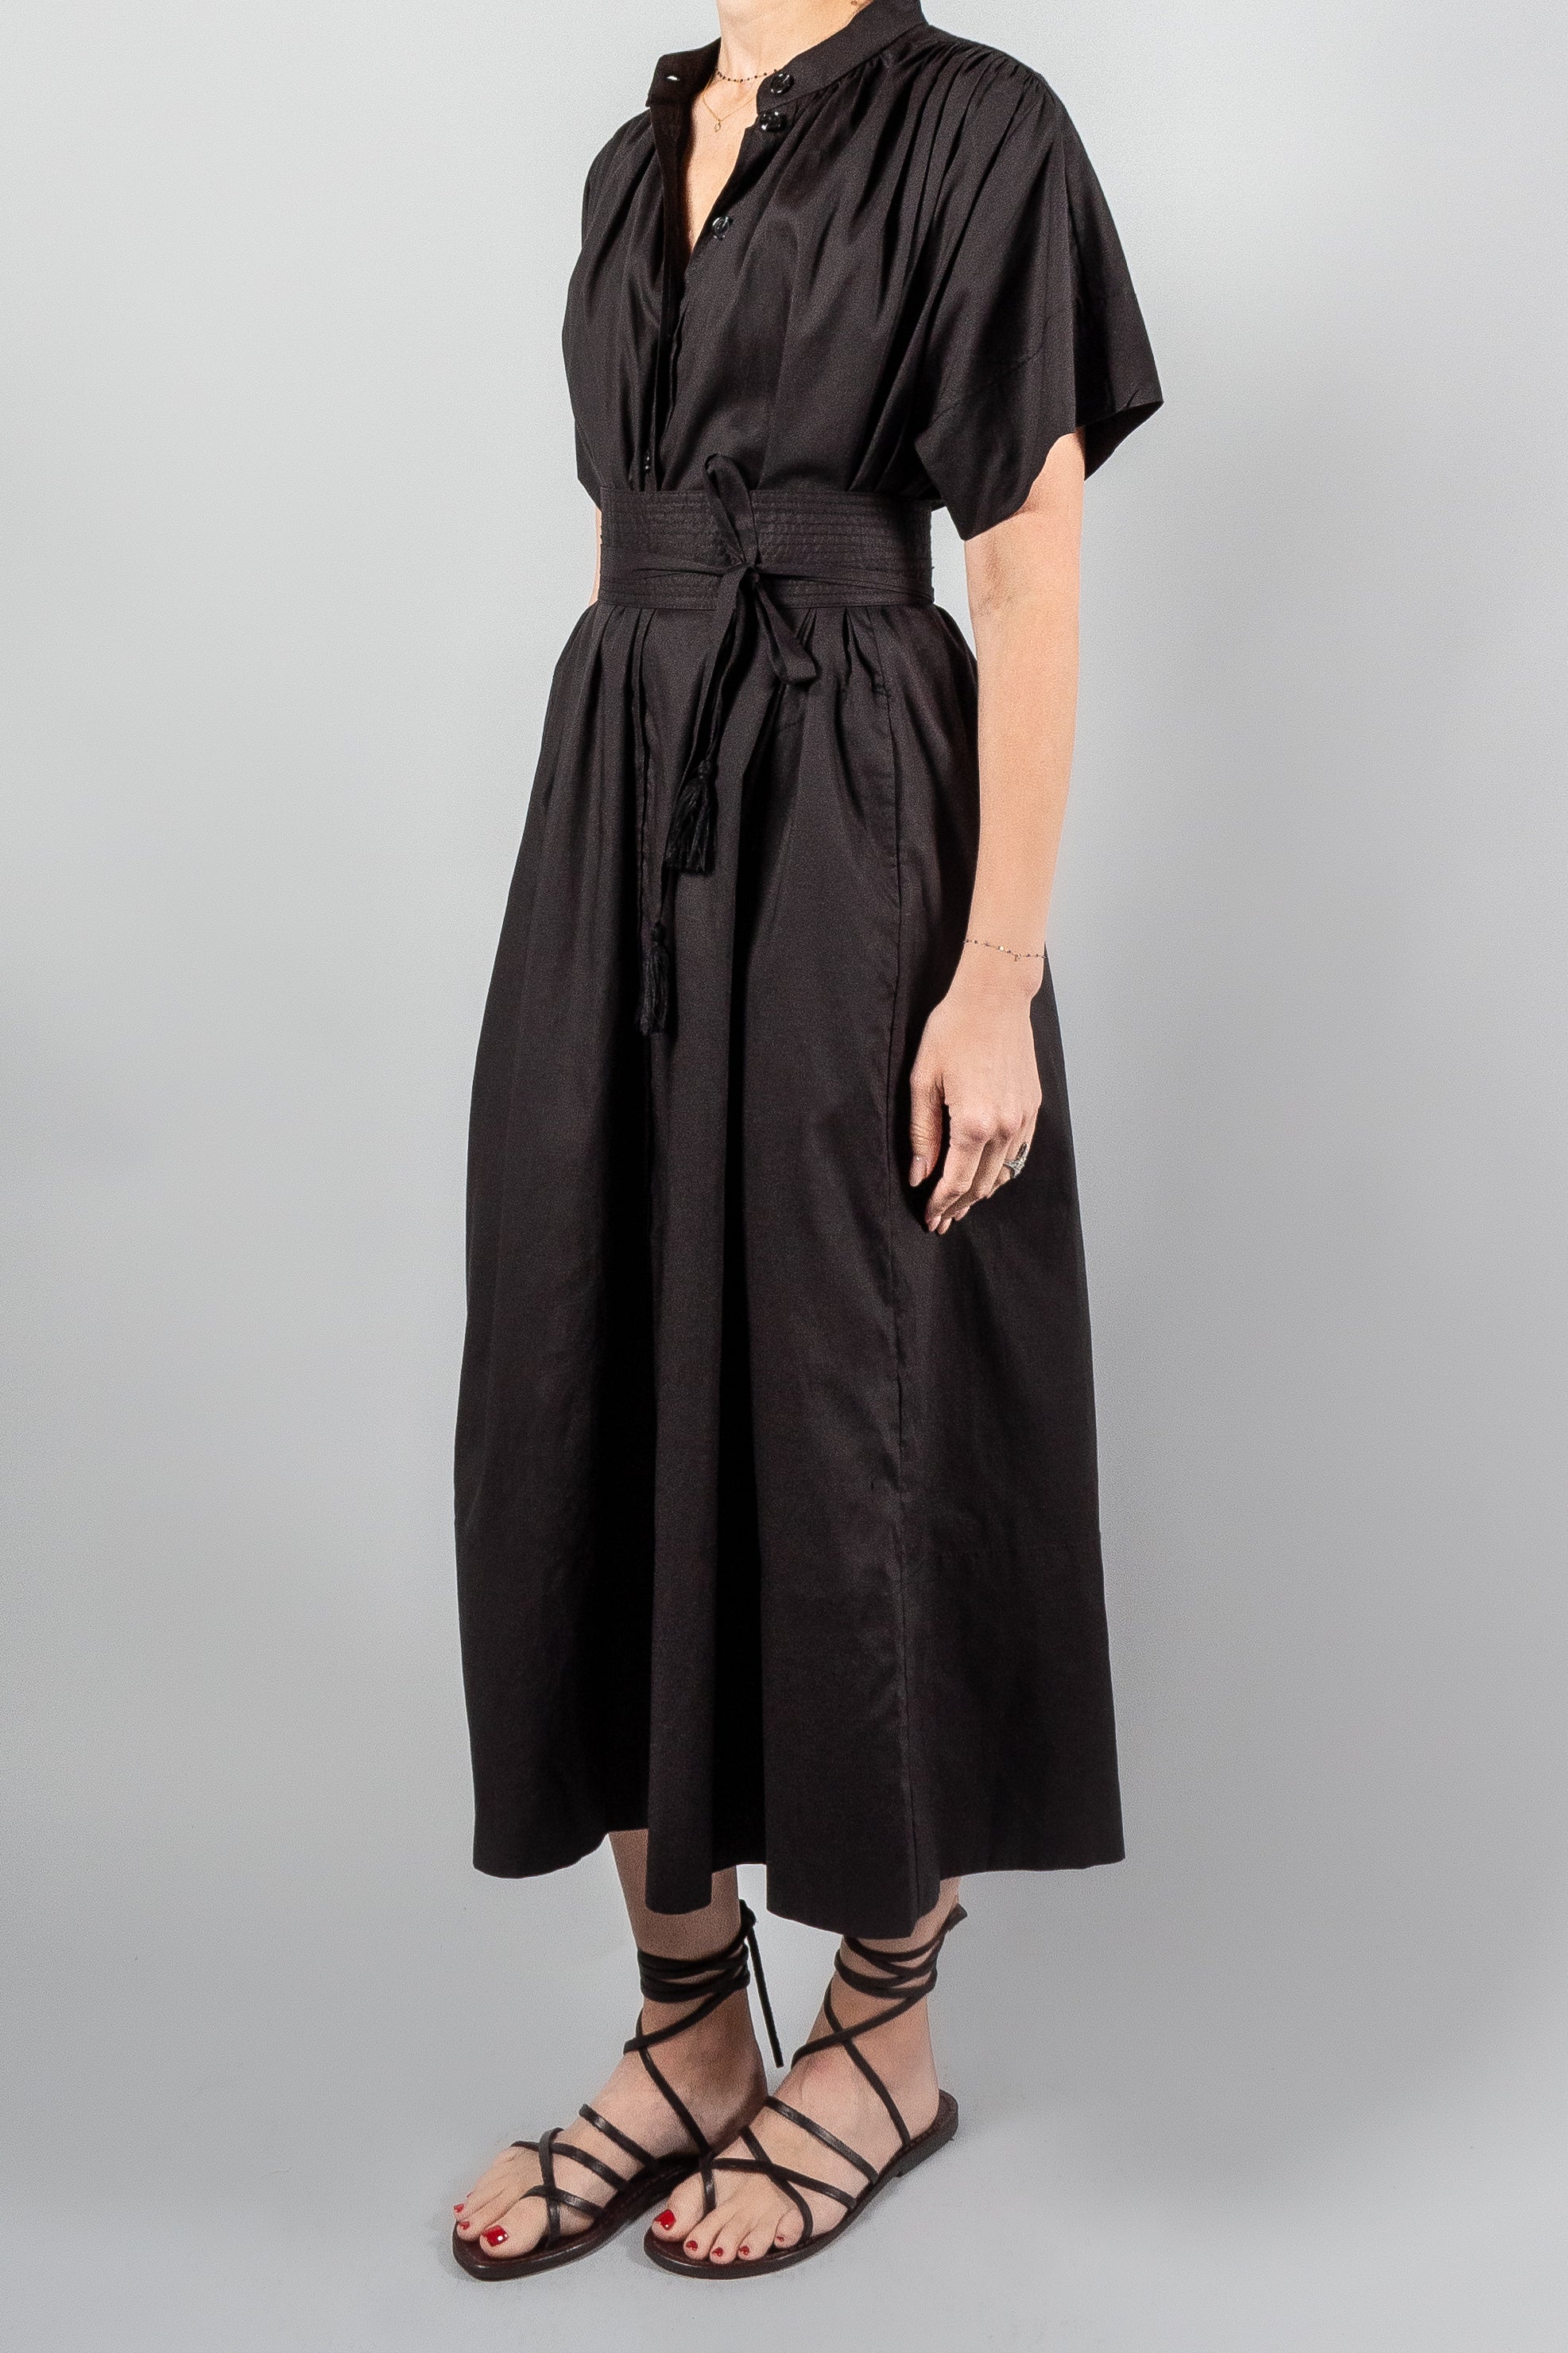 Vanessa Bruno Ciao Dress - Black-Dresses-Misch-Boutique-Vancouver-Canada-misch.ca